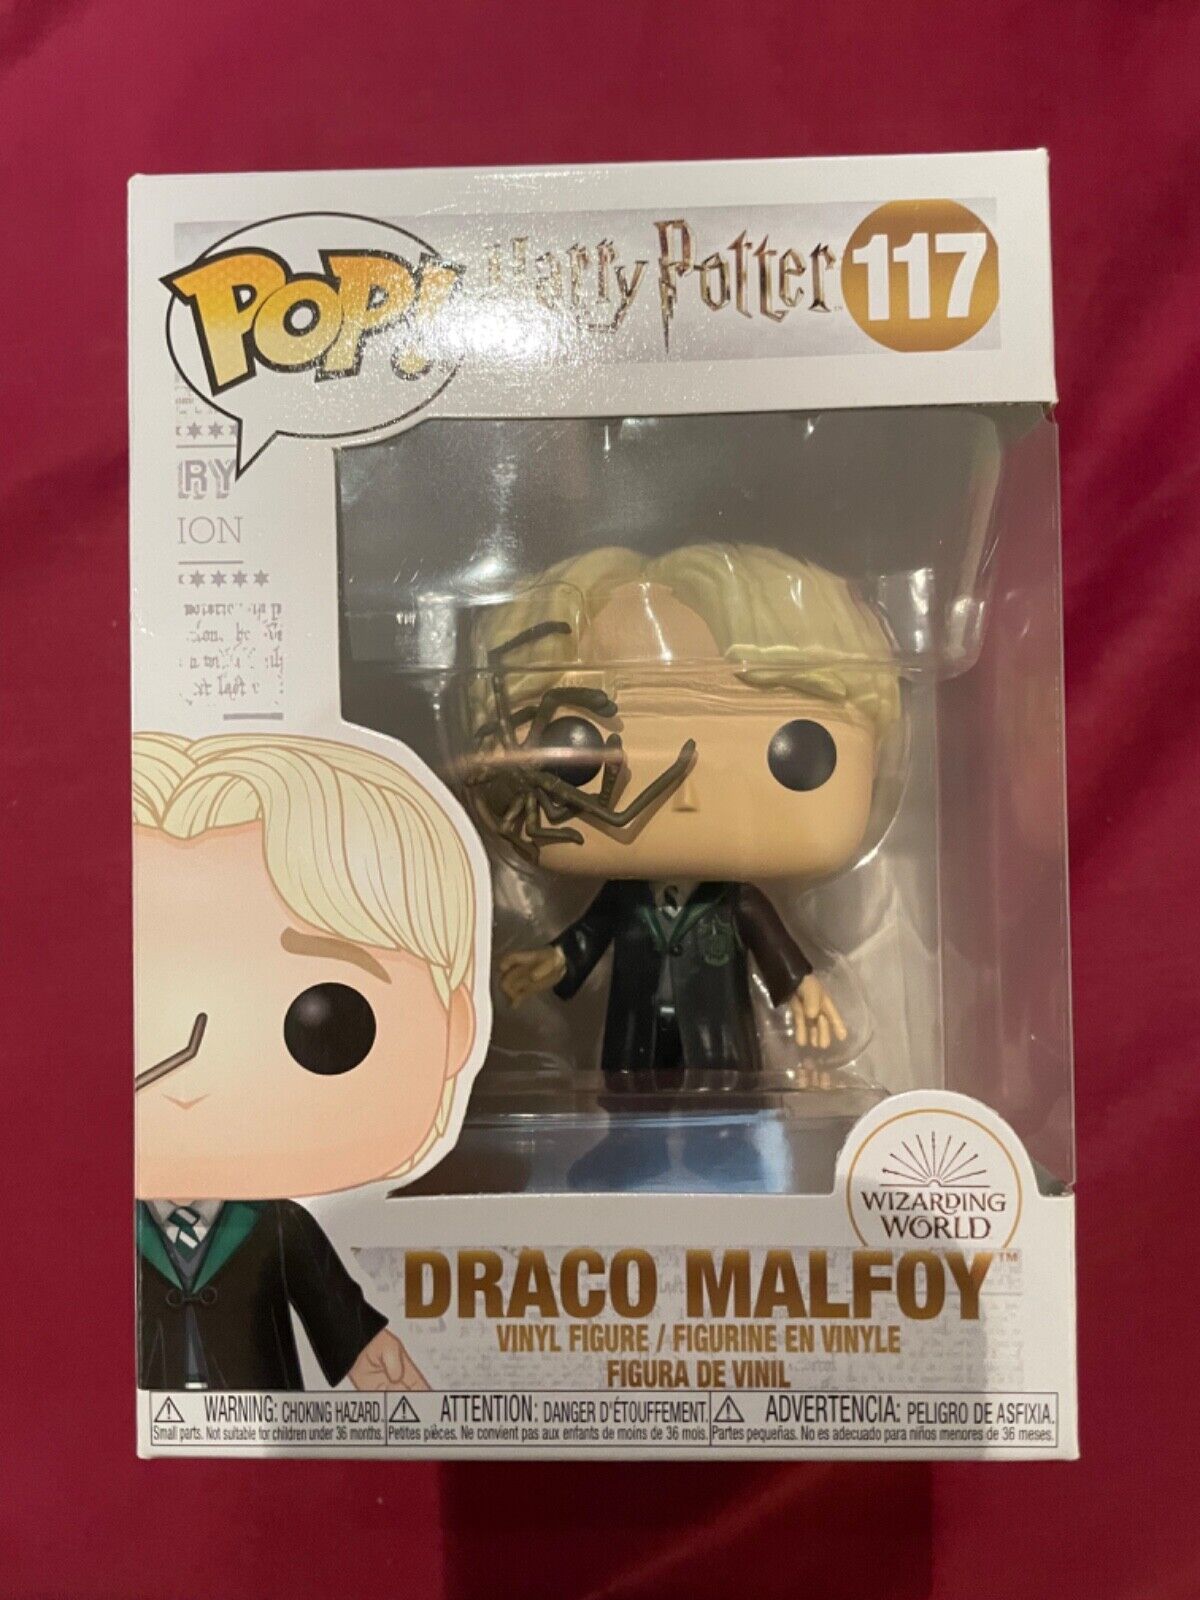 Unopened Funko Pop Vinyl: Harry Potter - Draco Malfoy #117